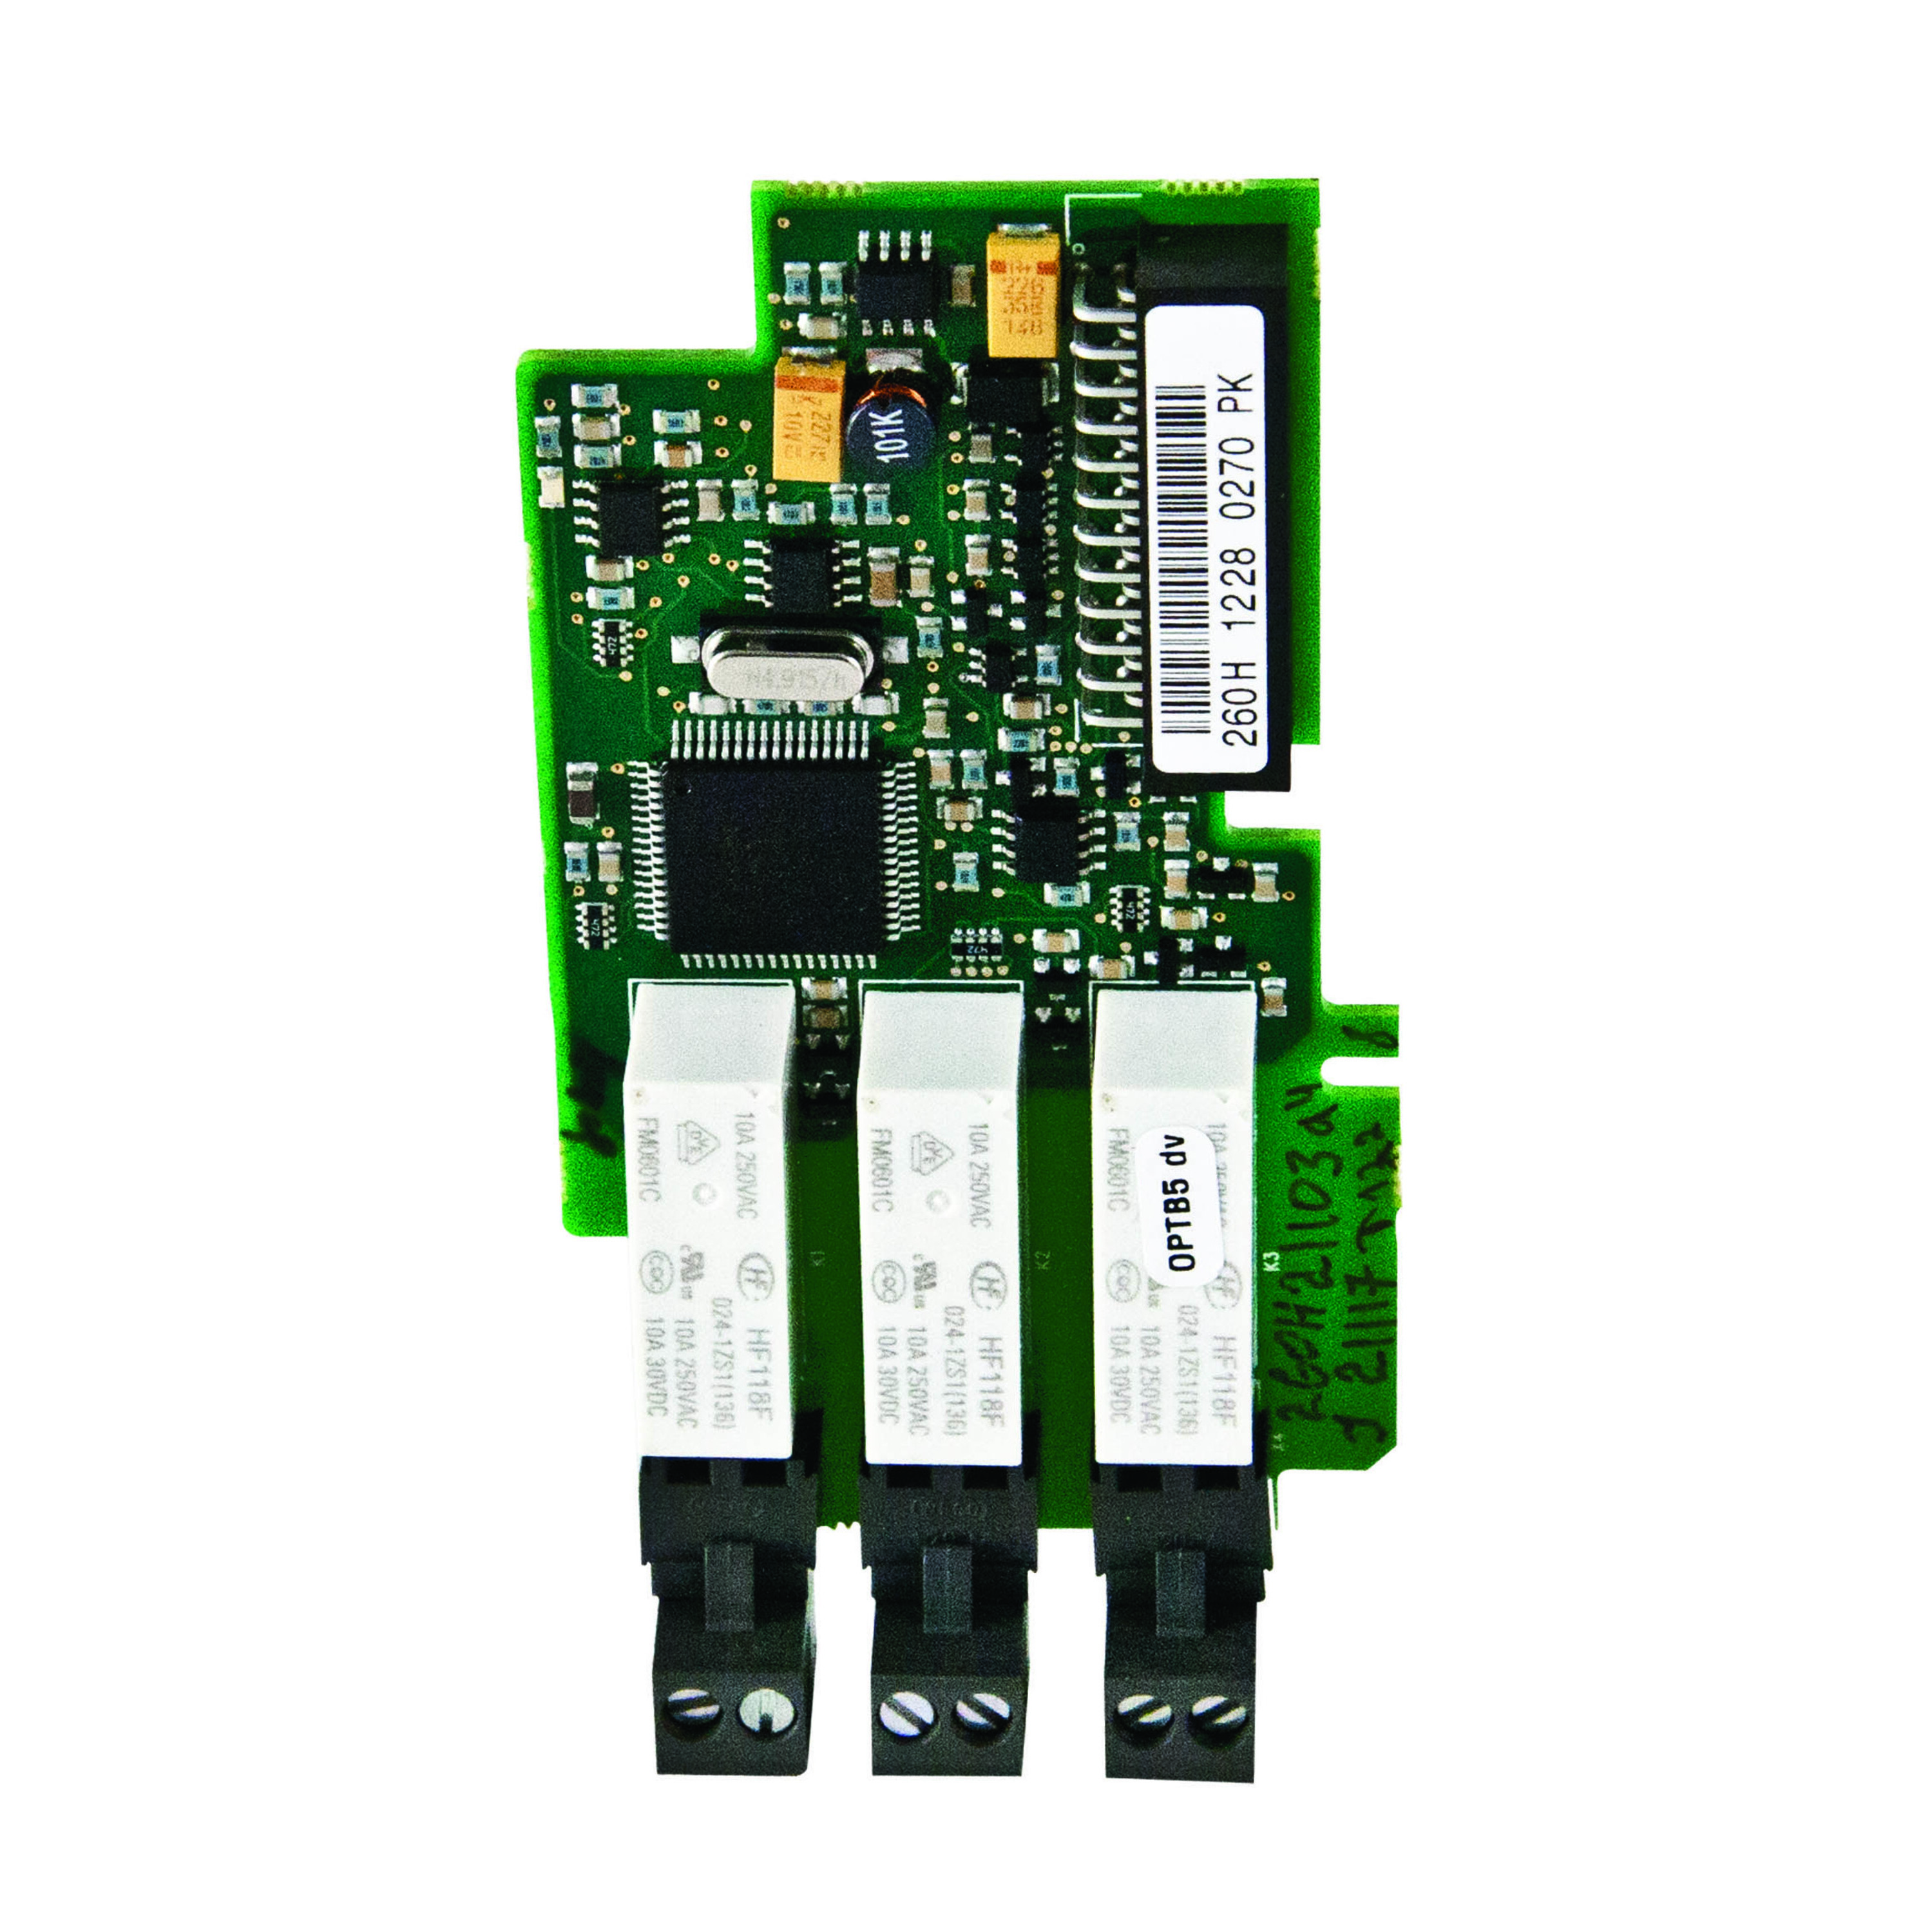 Eaton XMX-IO-B5-A Eaton | Cutler Hammer XMX-IO-B5-A  Variable Frequency Drives HVAC Drives – Communication Cards https://gesrepair.com/wp-content/uploads/2022/Eaton/Images/Eaton_XMX-IO-B5-A_Variable_Frequency_Drive.jpg